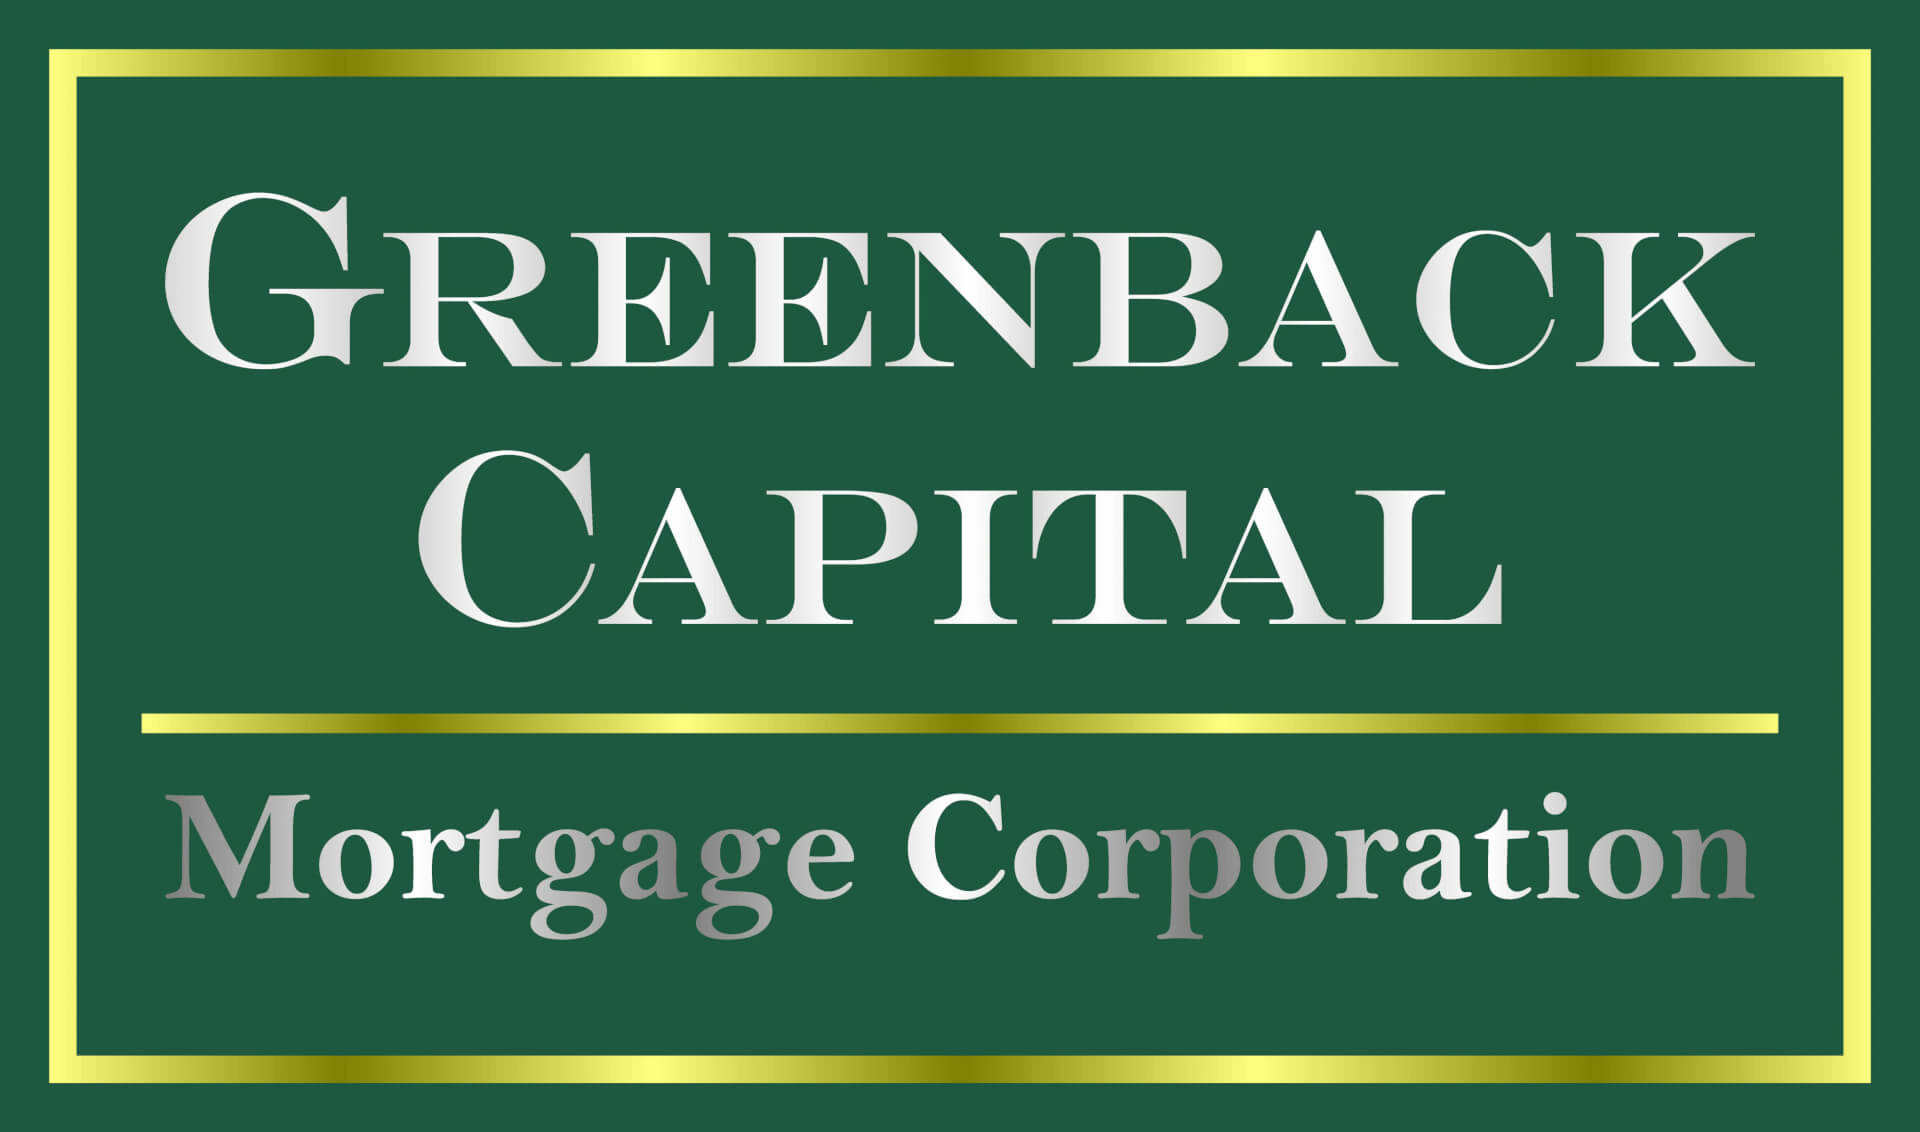 Greenback Capital Mortgage Corporation